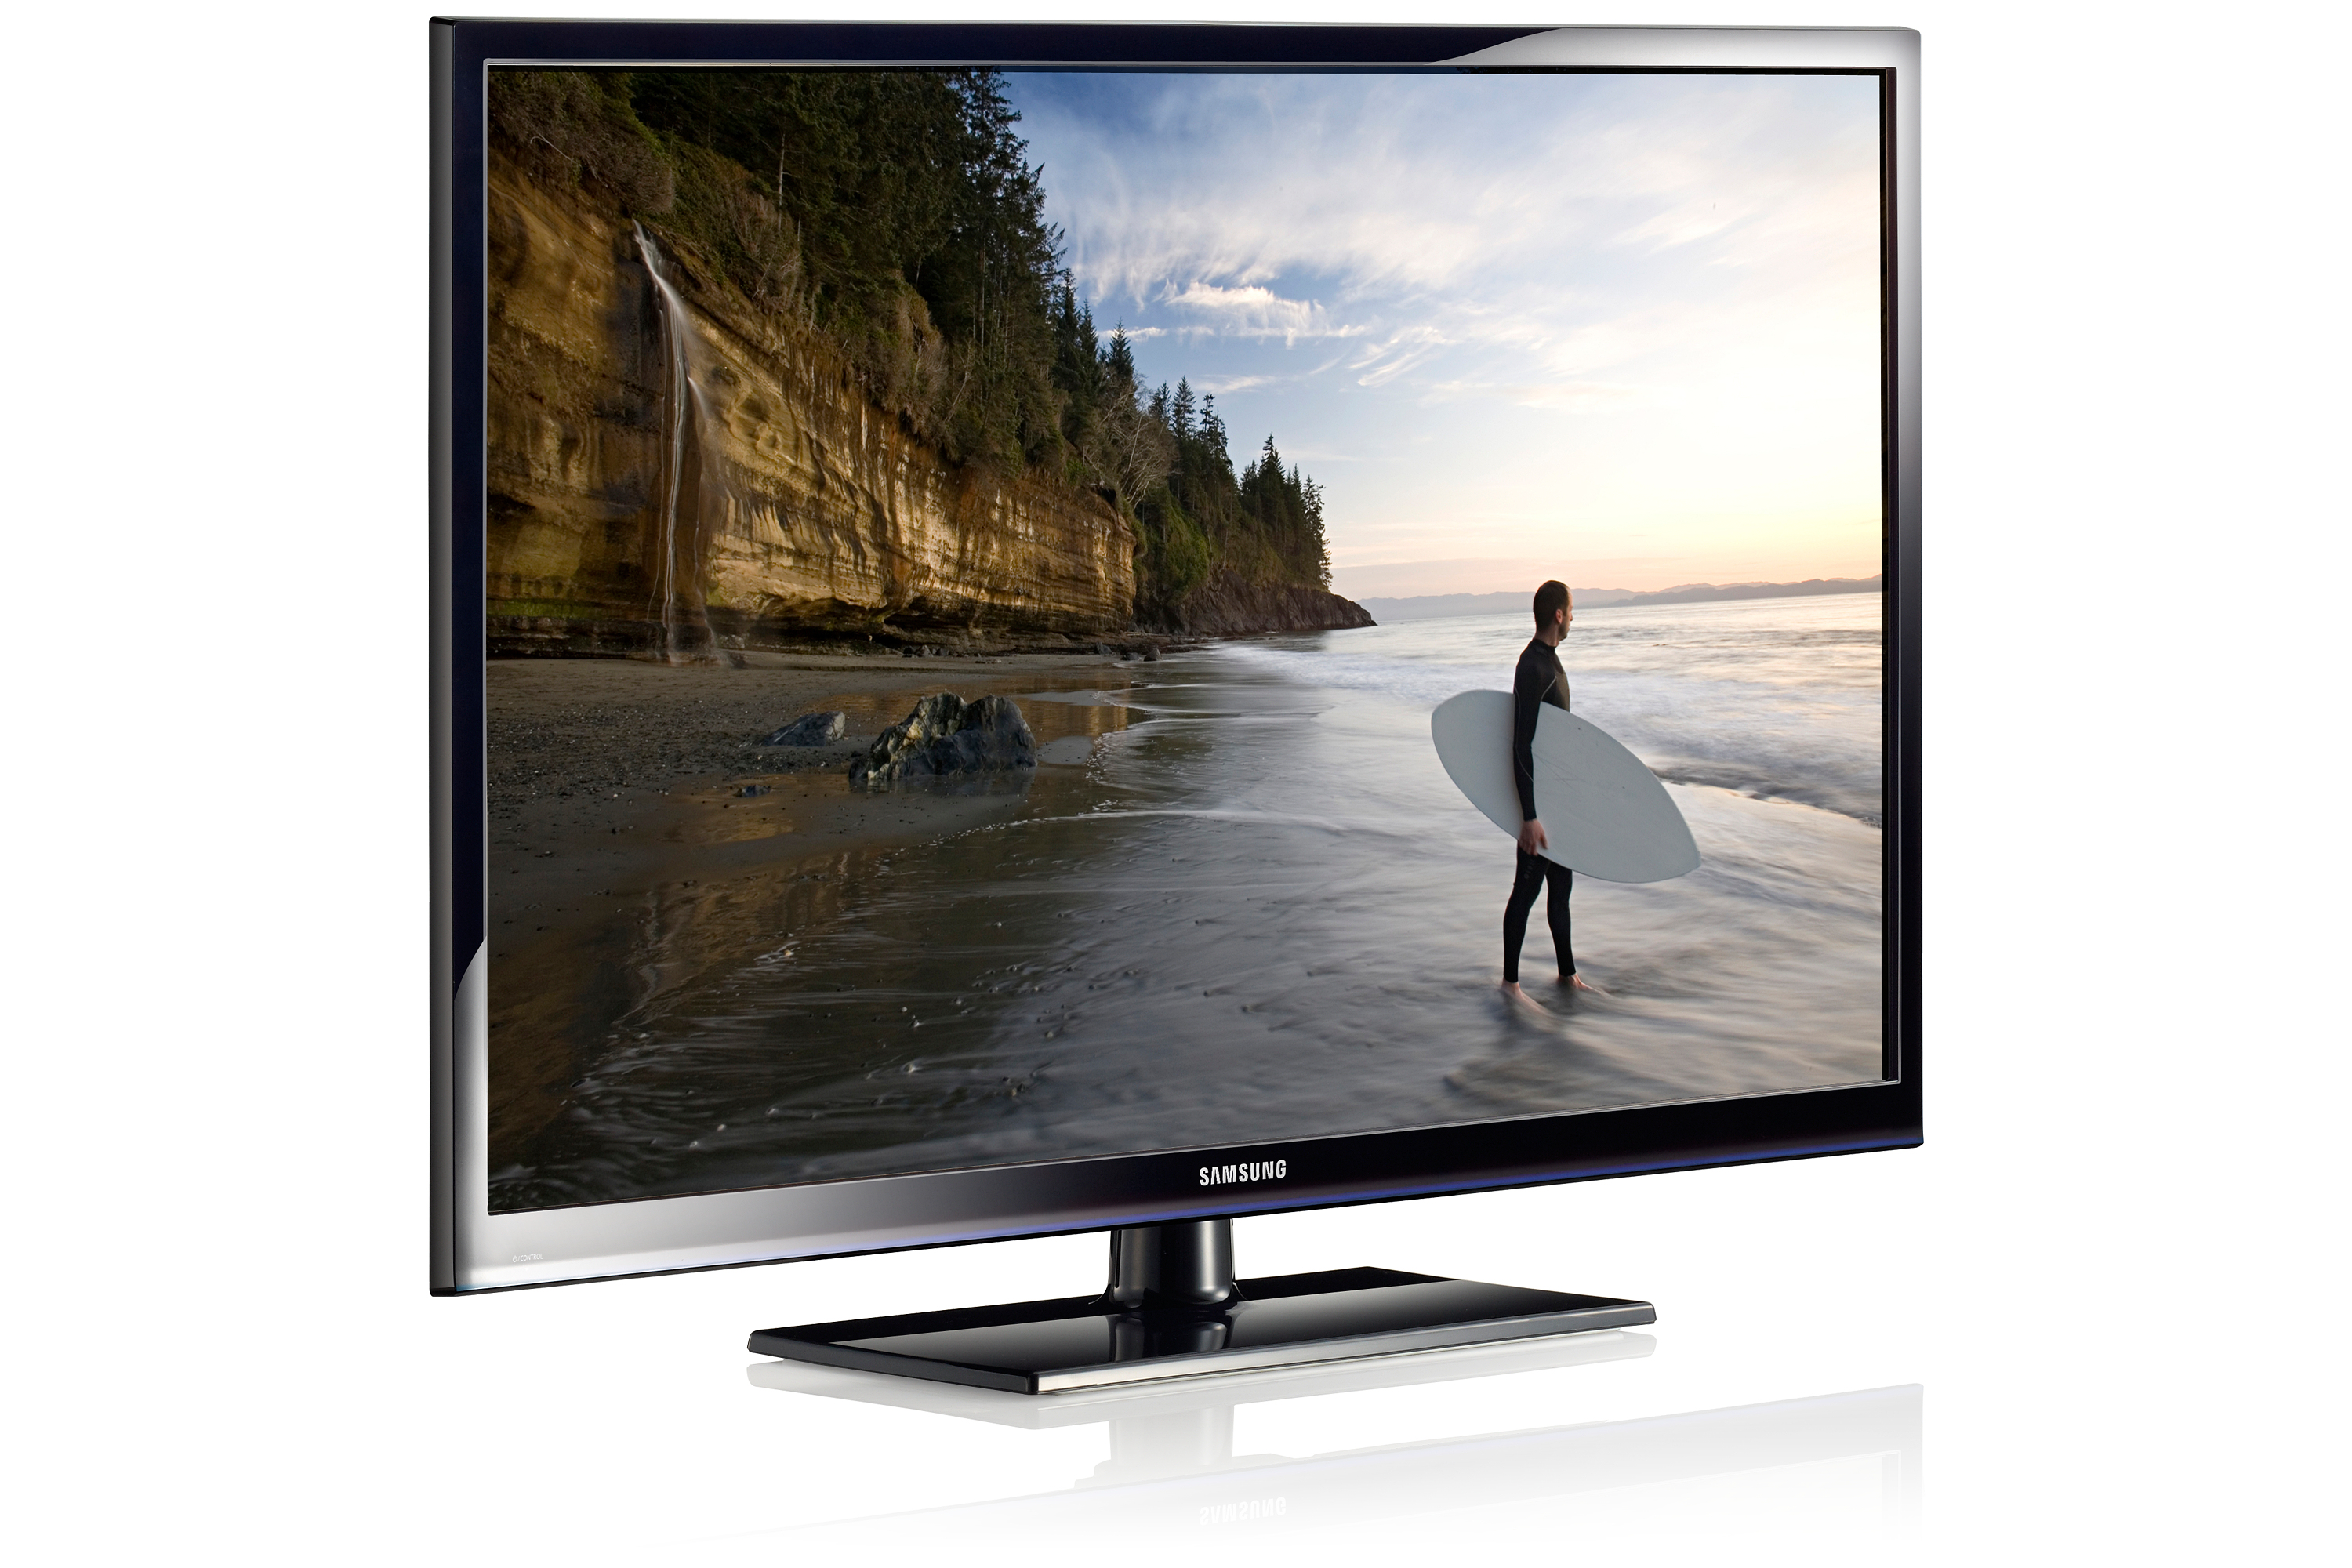 Продам телевизор самсунг. Samsung Smart TV 40. Телевизор самсунг 42 дюйма смарт. Samsung телевизор 2012 Smart TV. Телевизор самсунг 46 led смарт ТВ.